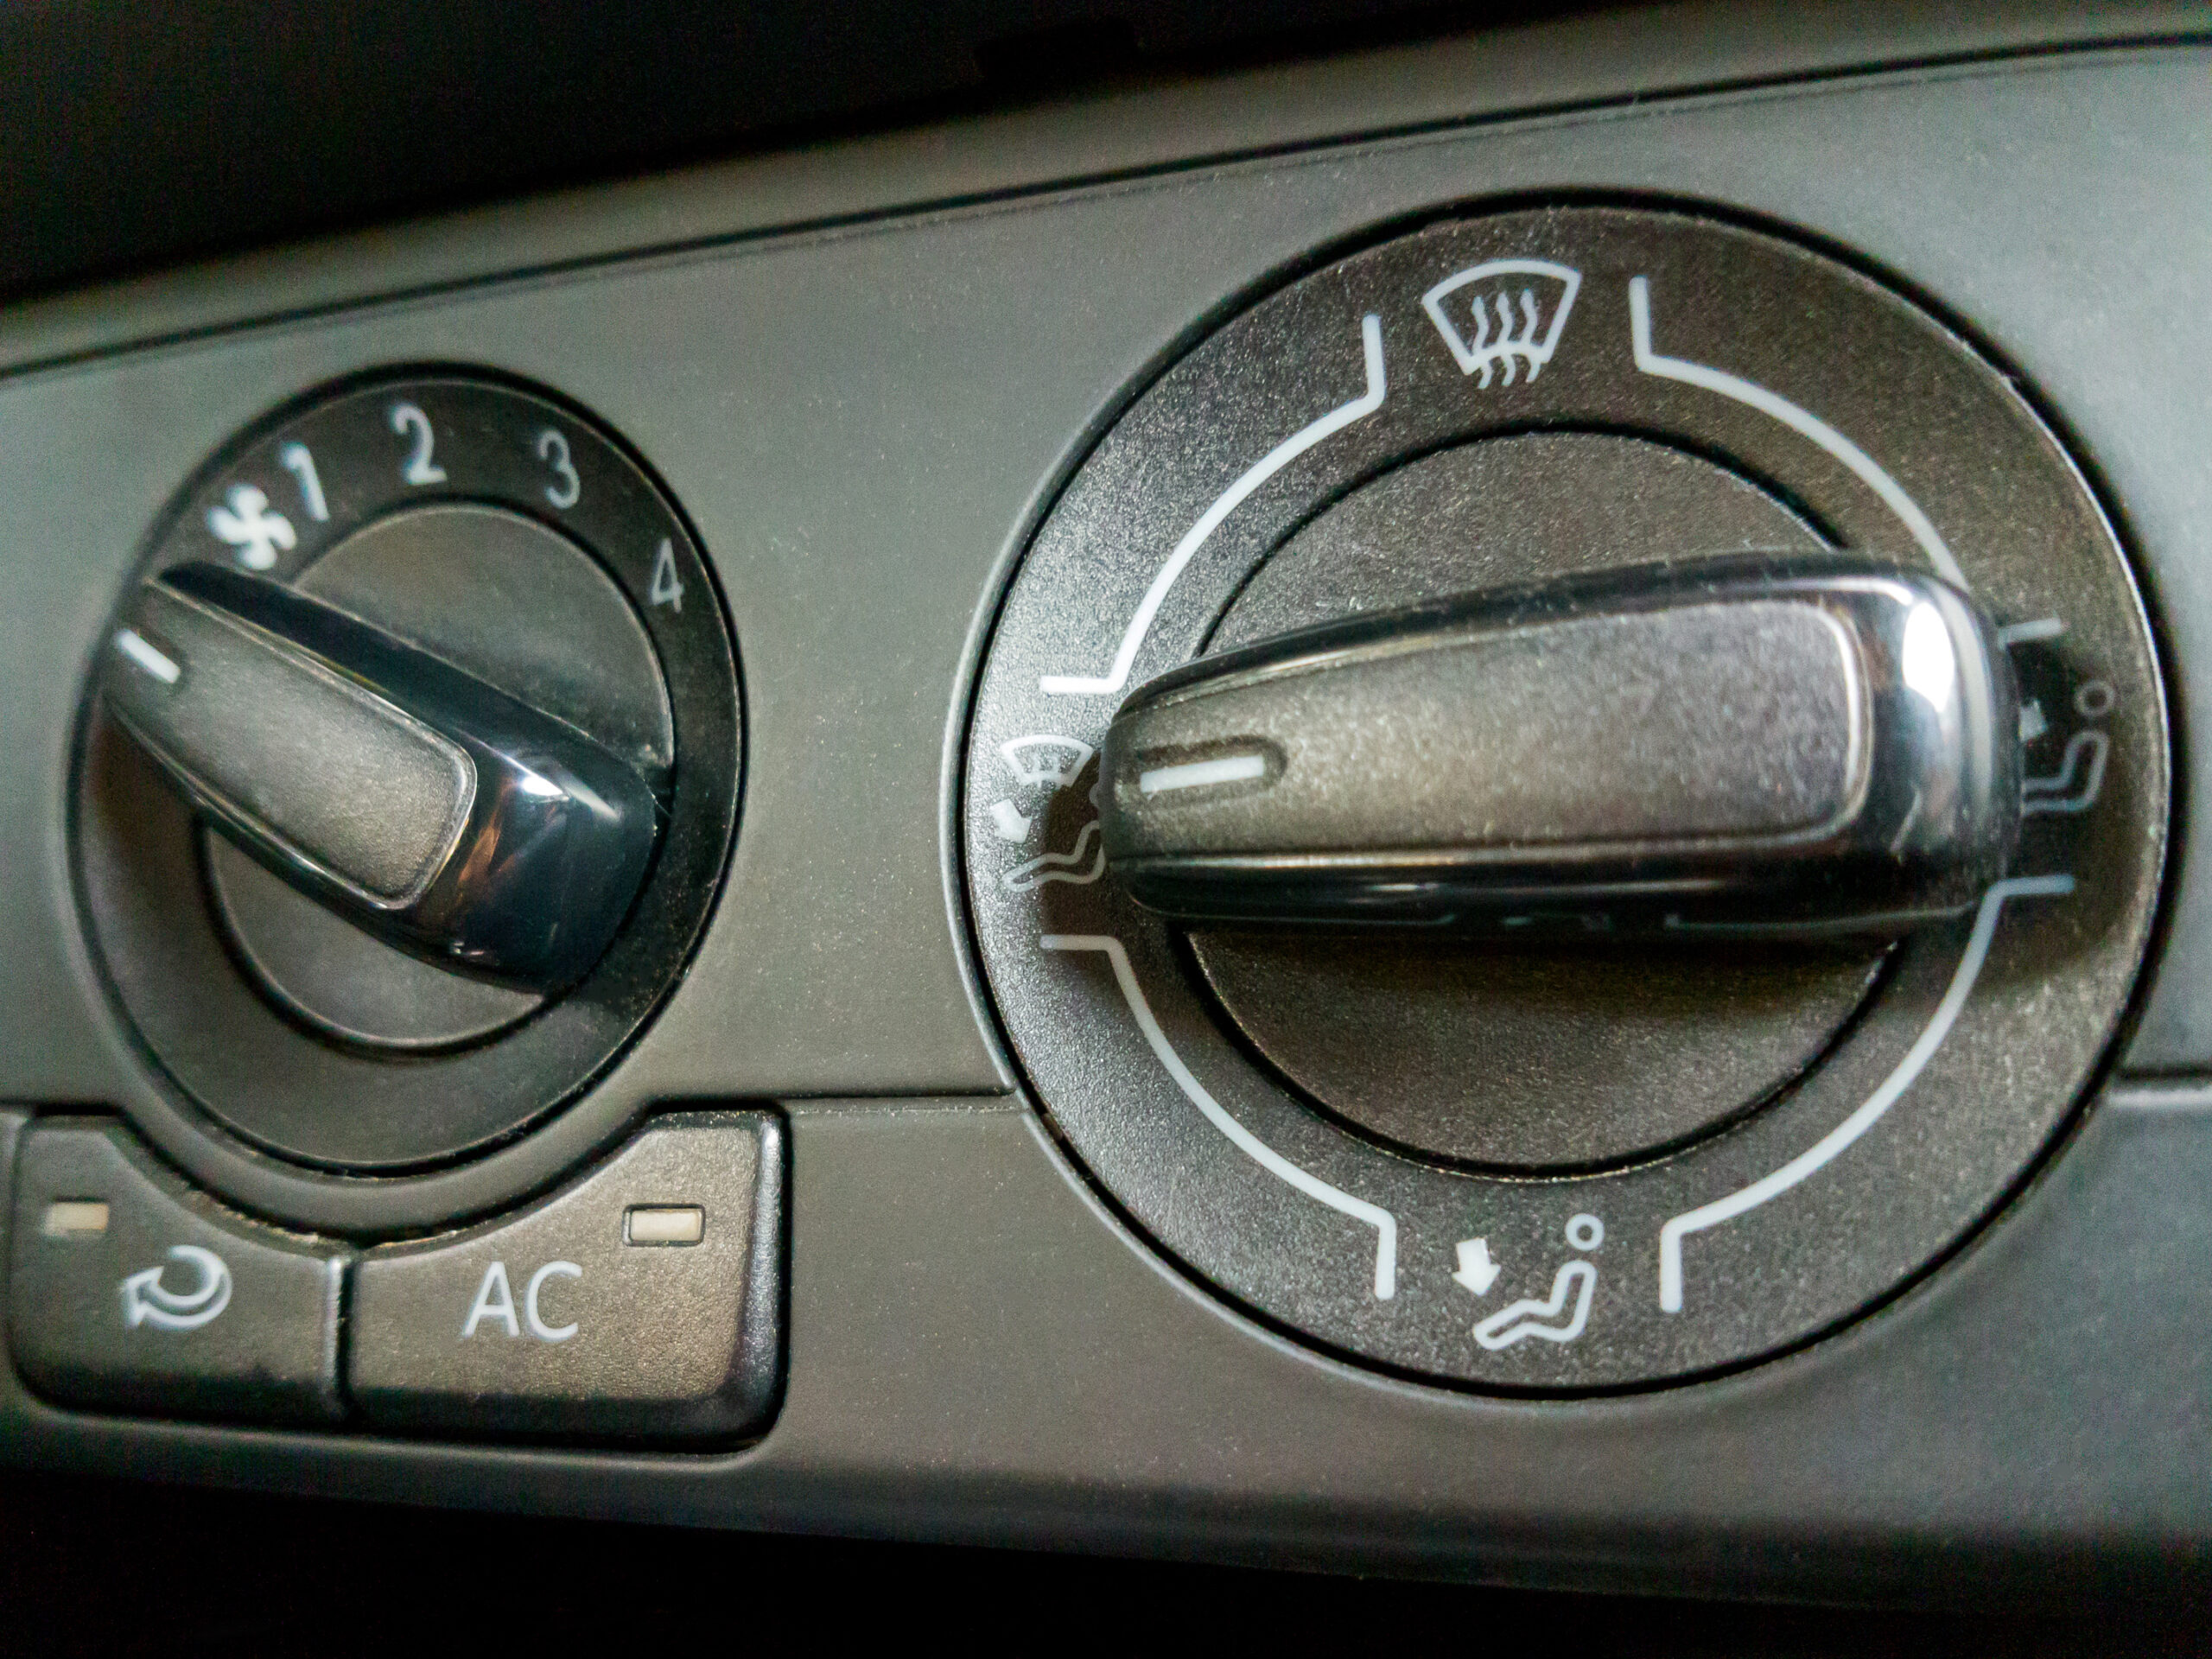 Car air conditioning control panel. Car interior